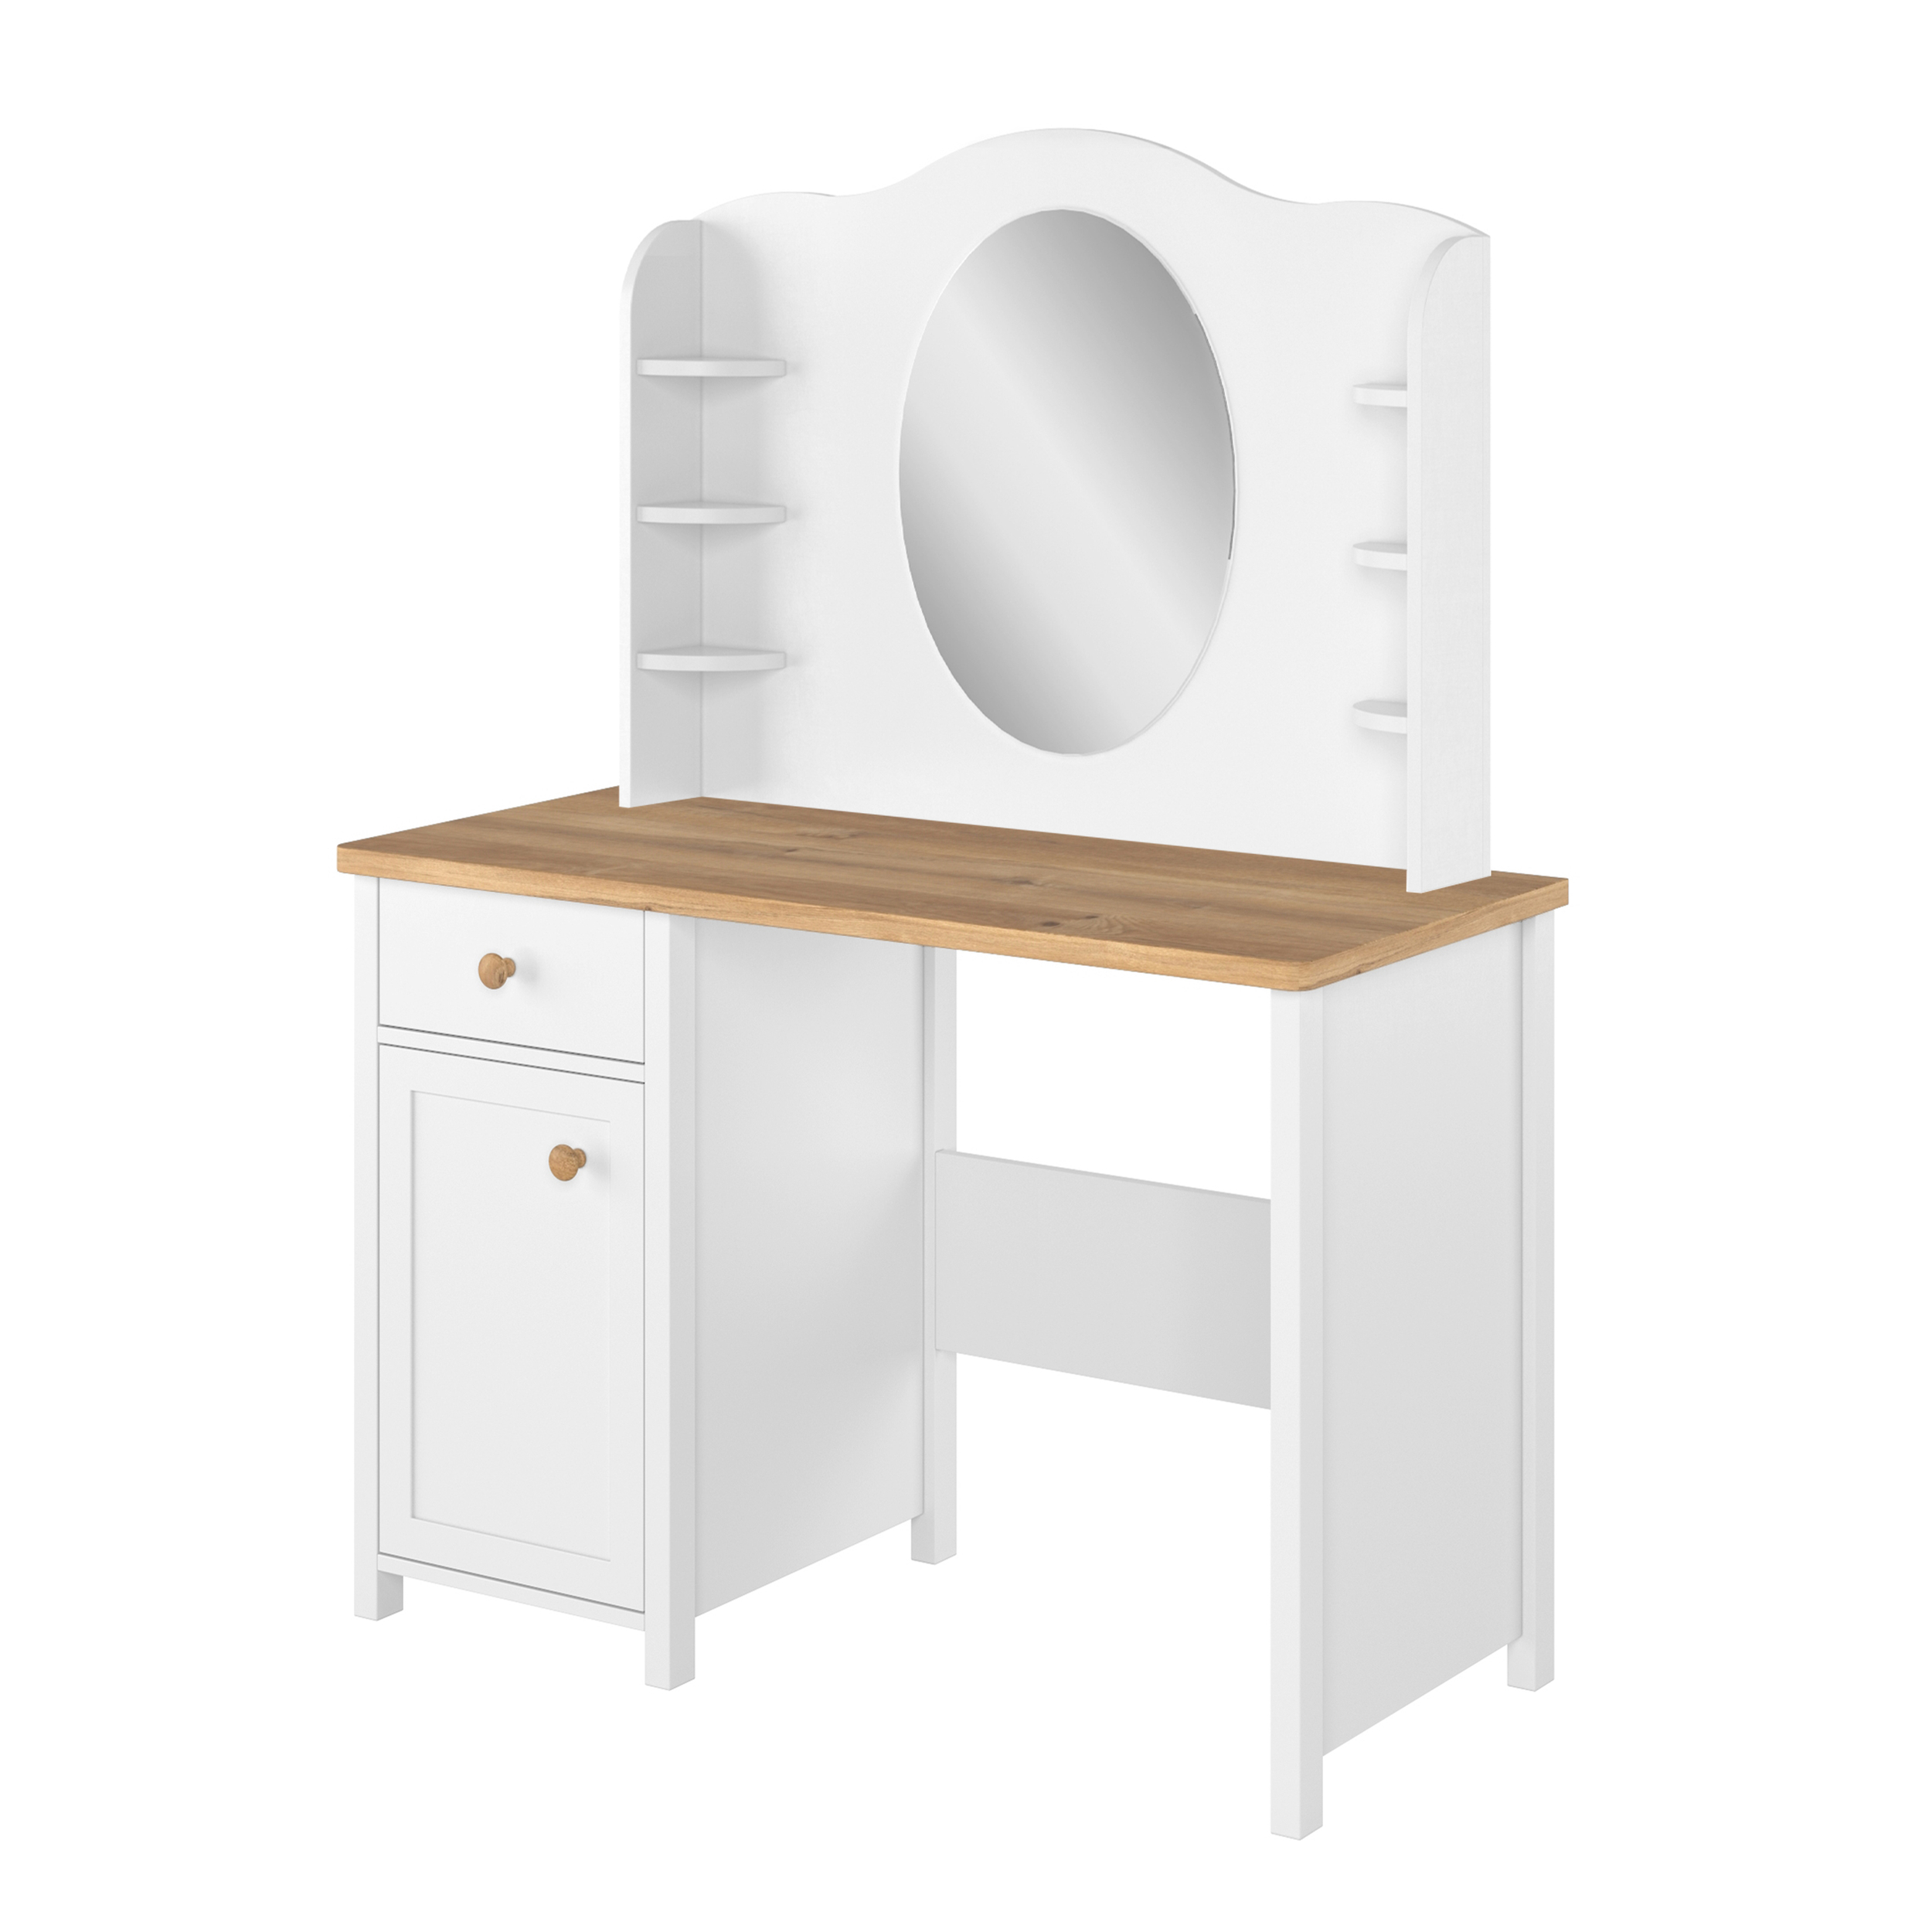 petits-meubles-eloi-SO6BDN-bureau-coiffeuse-1-porte-1-tiroir-blanc-bois-01